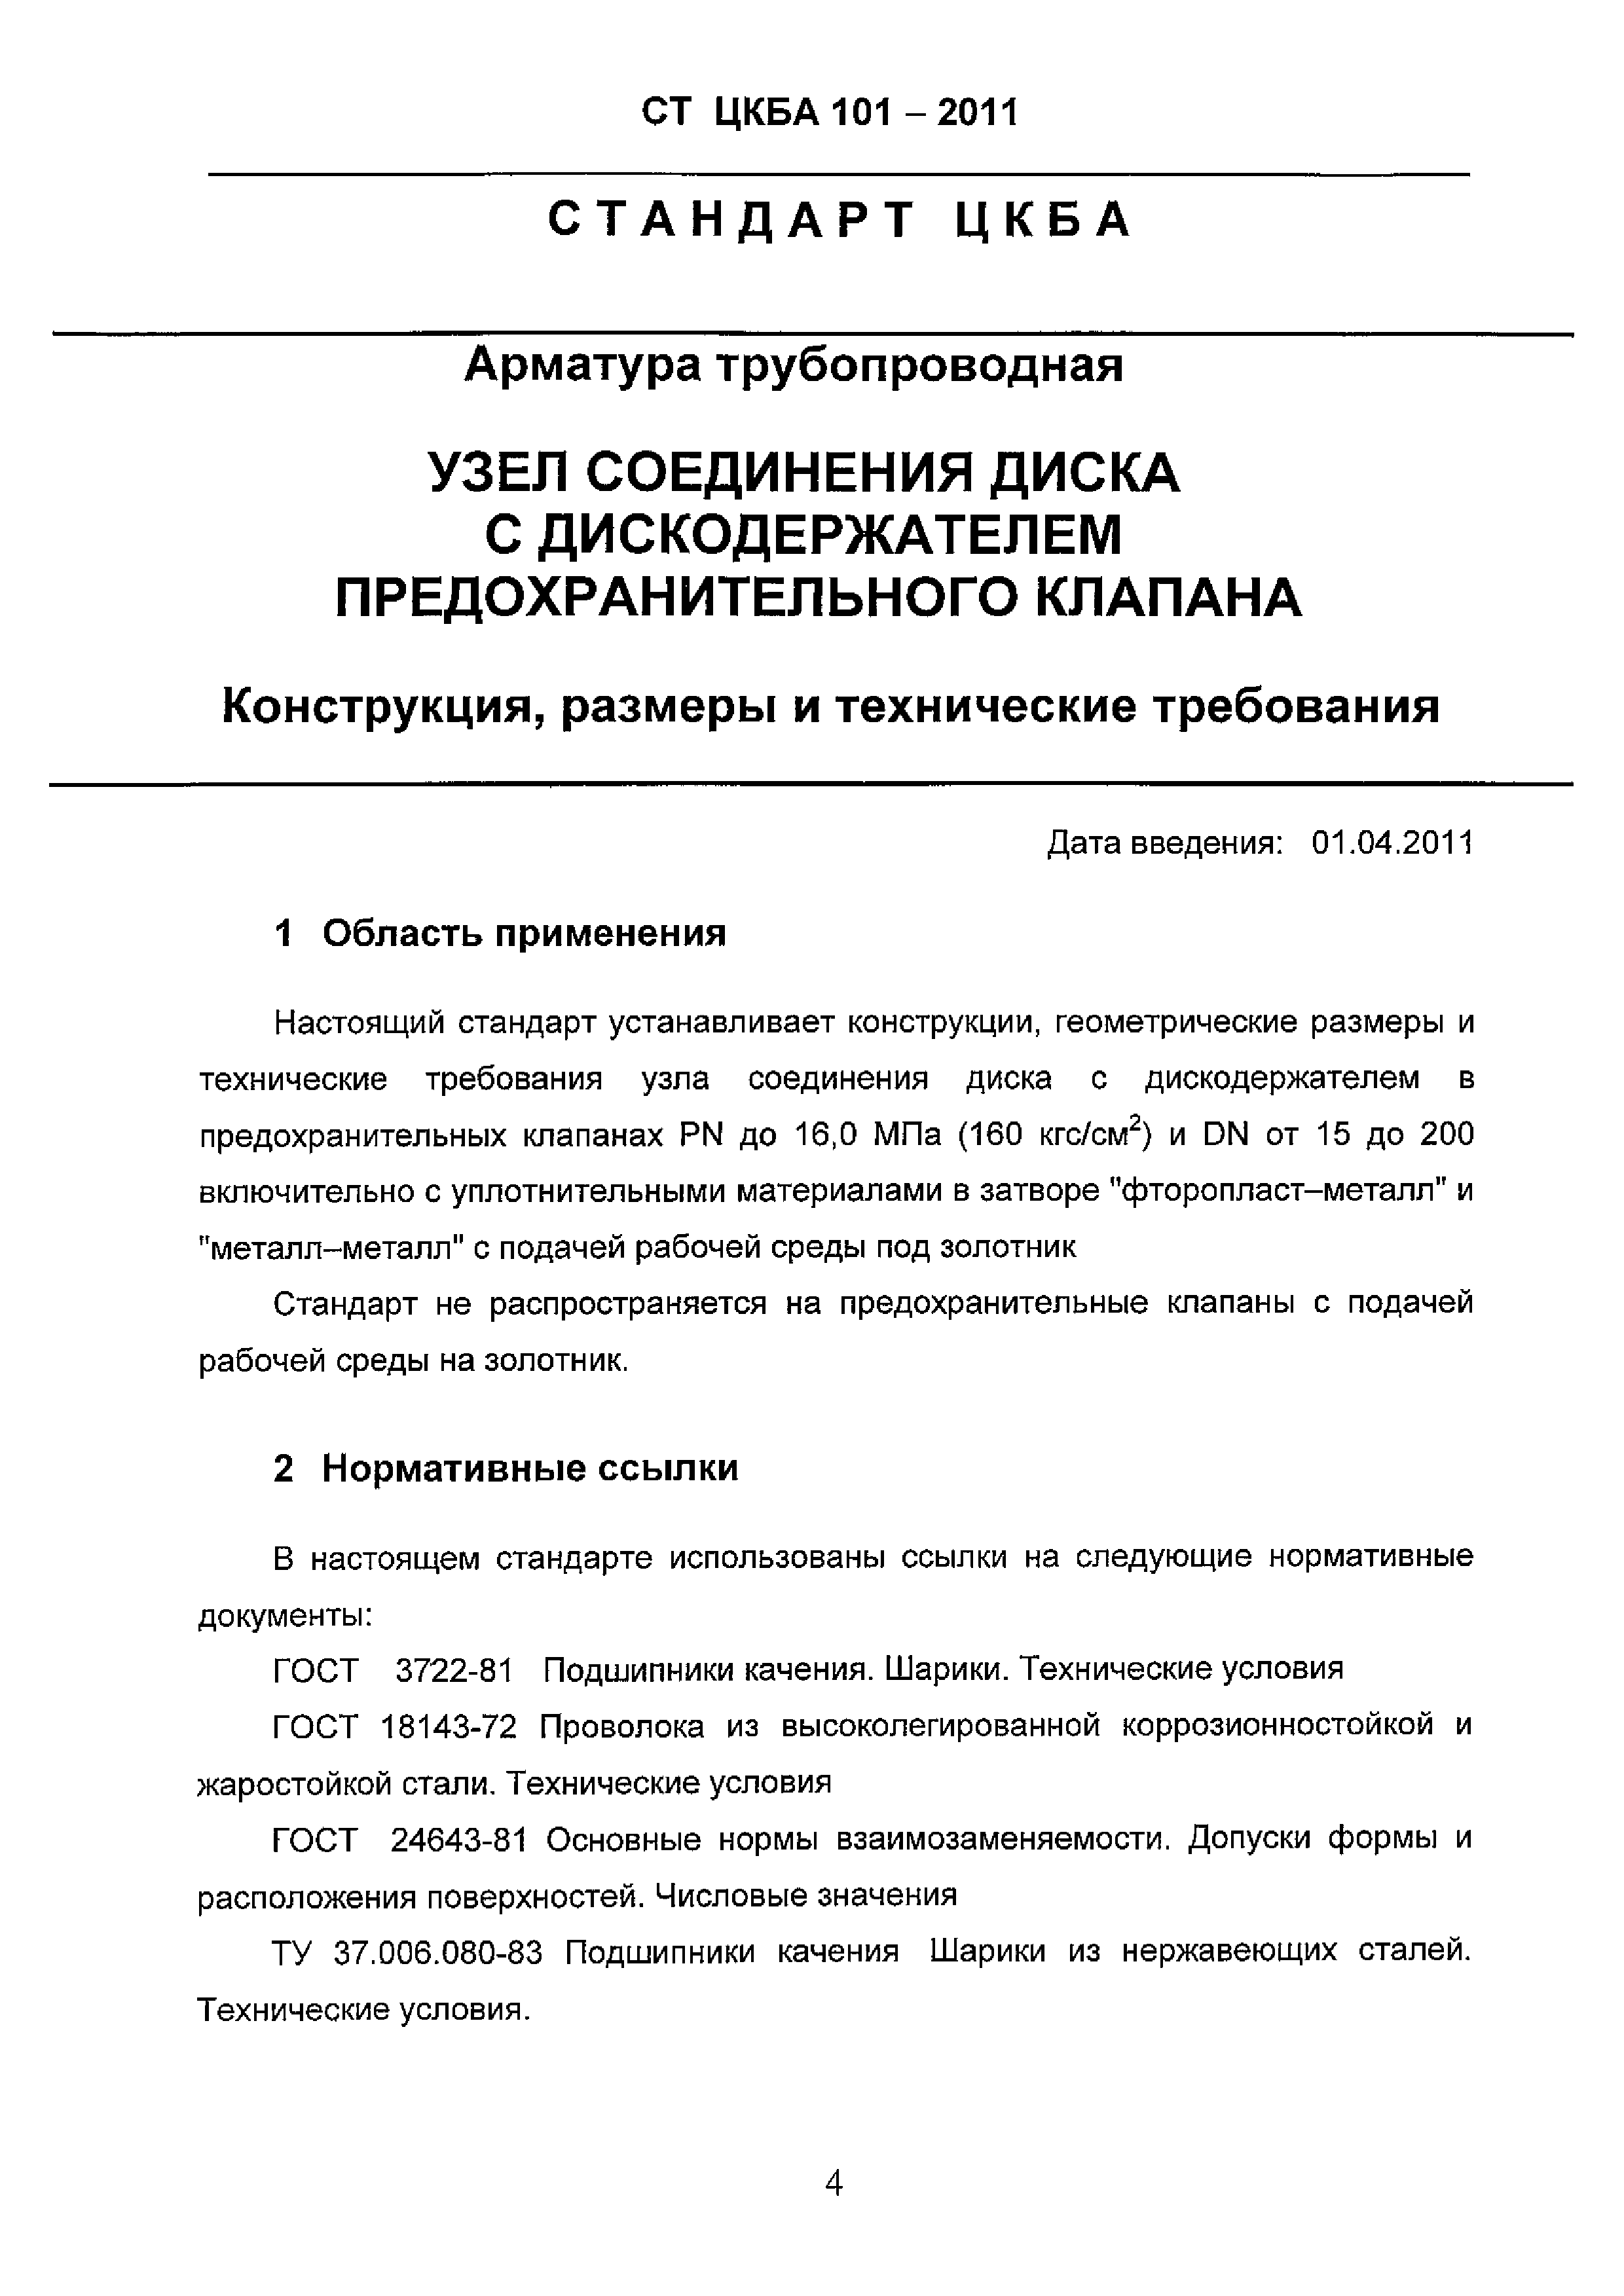 СТ ЦКБА 101-2011